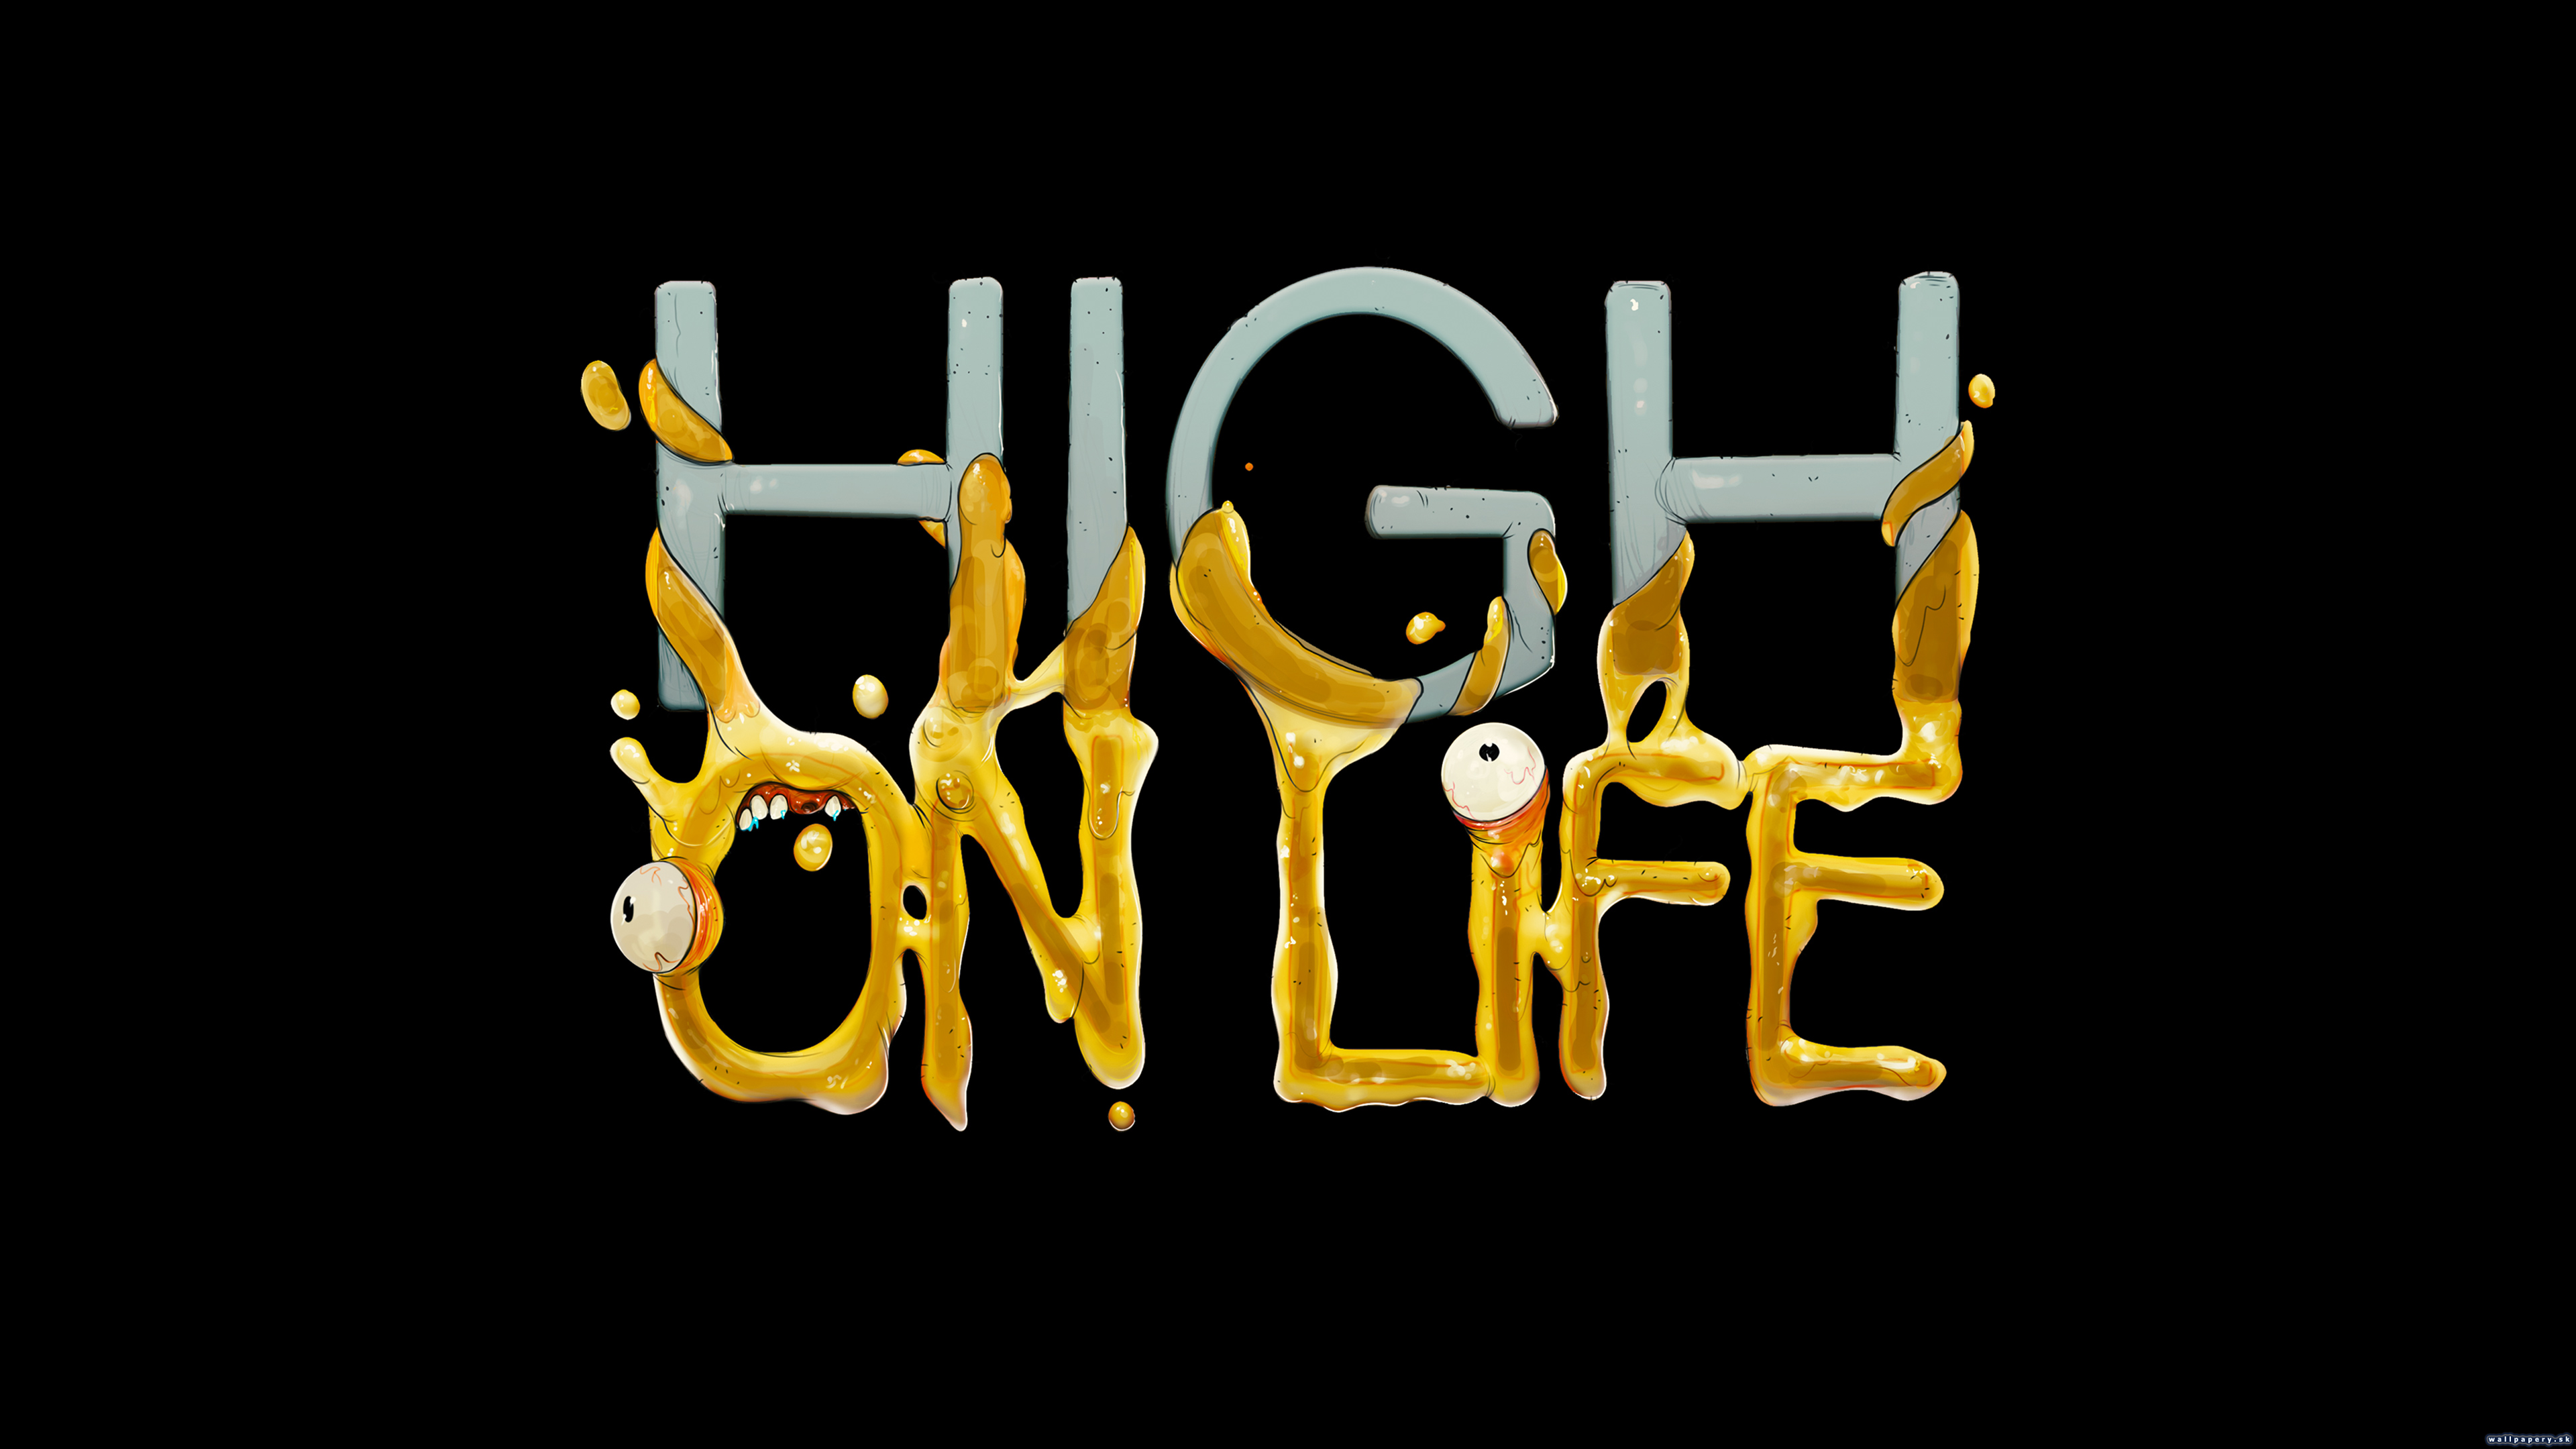 High on Life - wallpaper 4